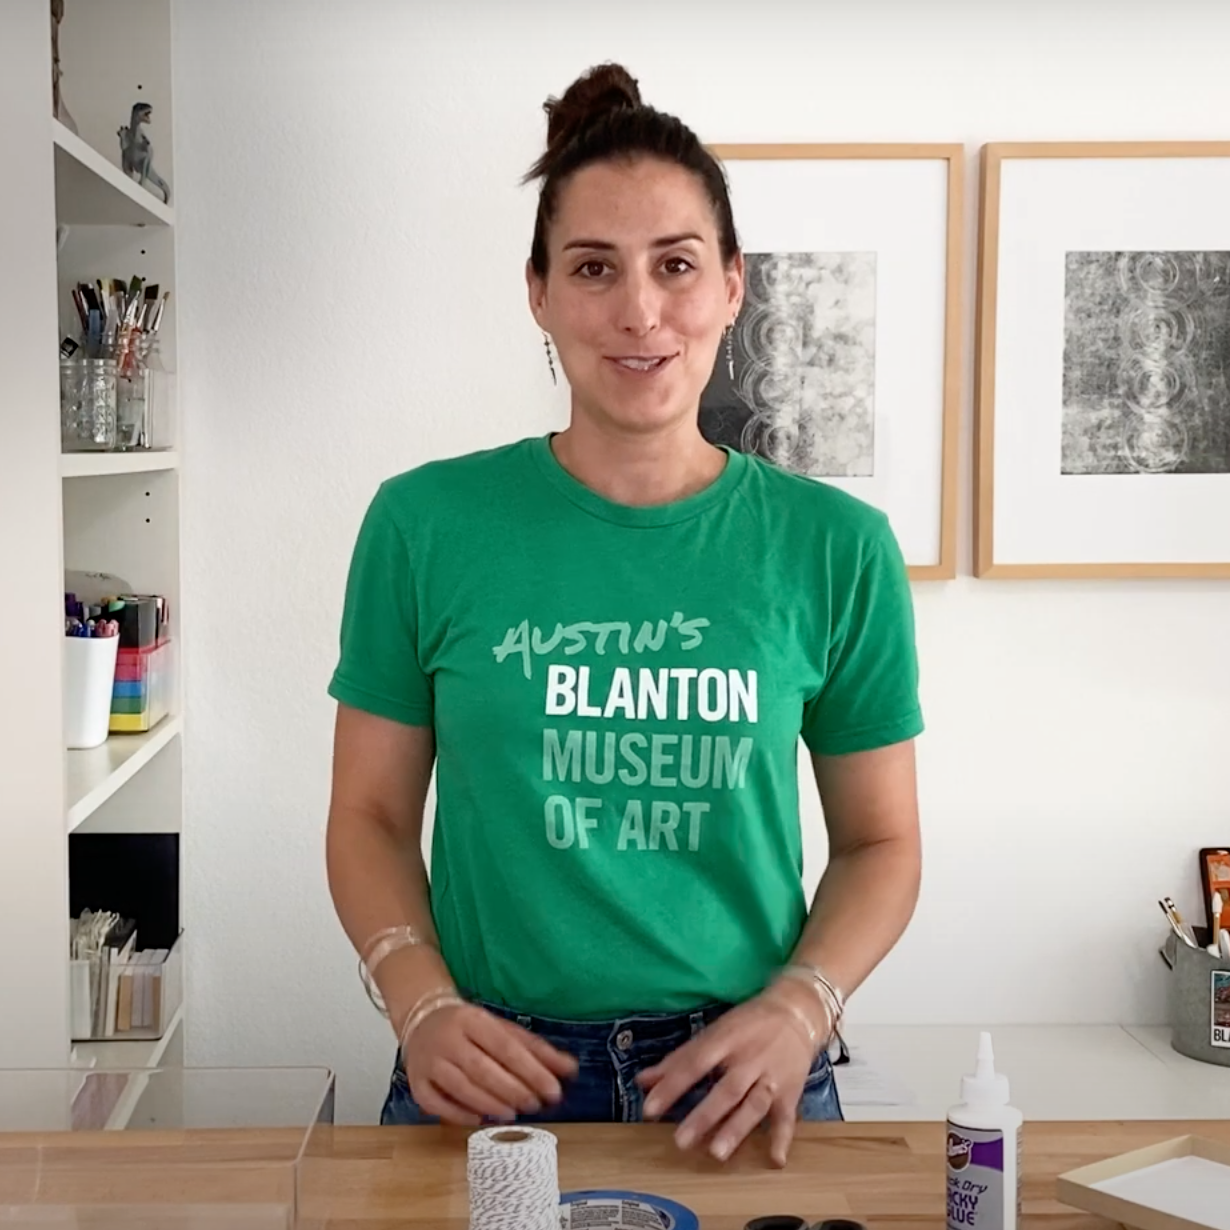 a woman wearing a green "Austin's Blanton Museum of Art" t-shirt